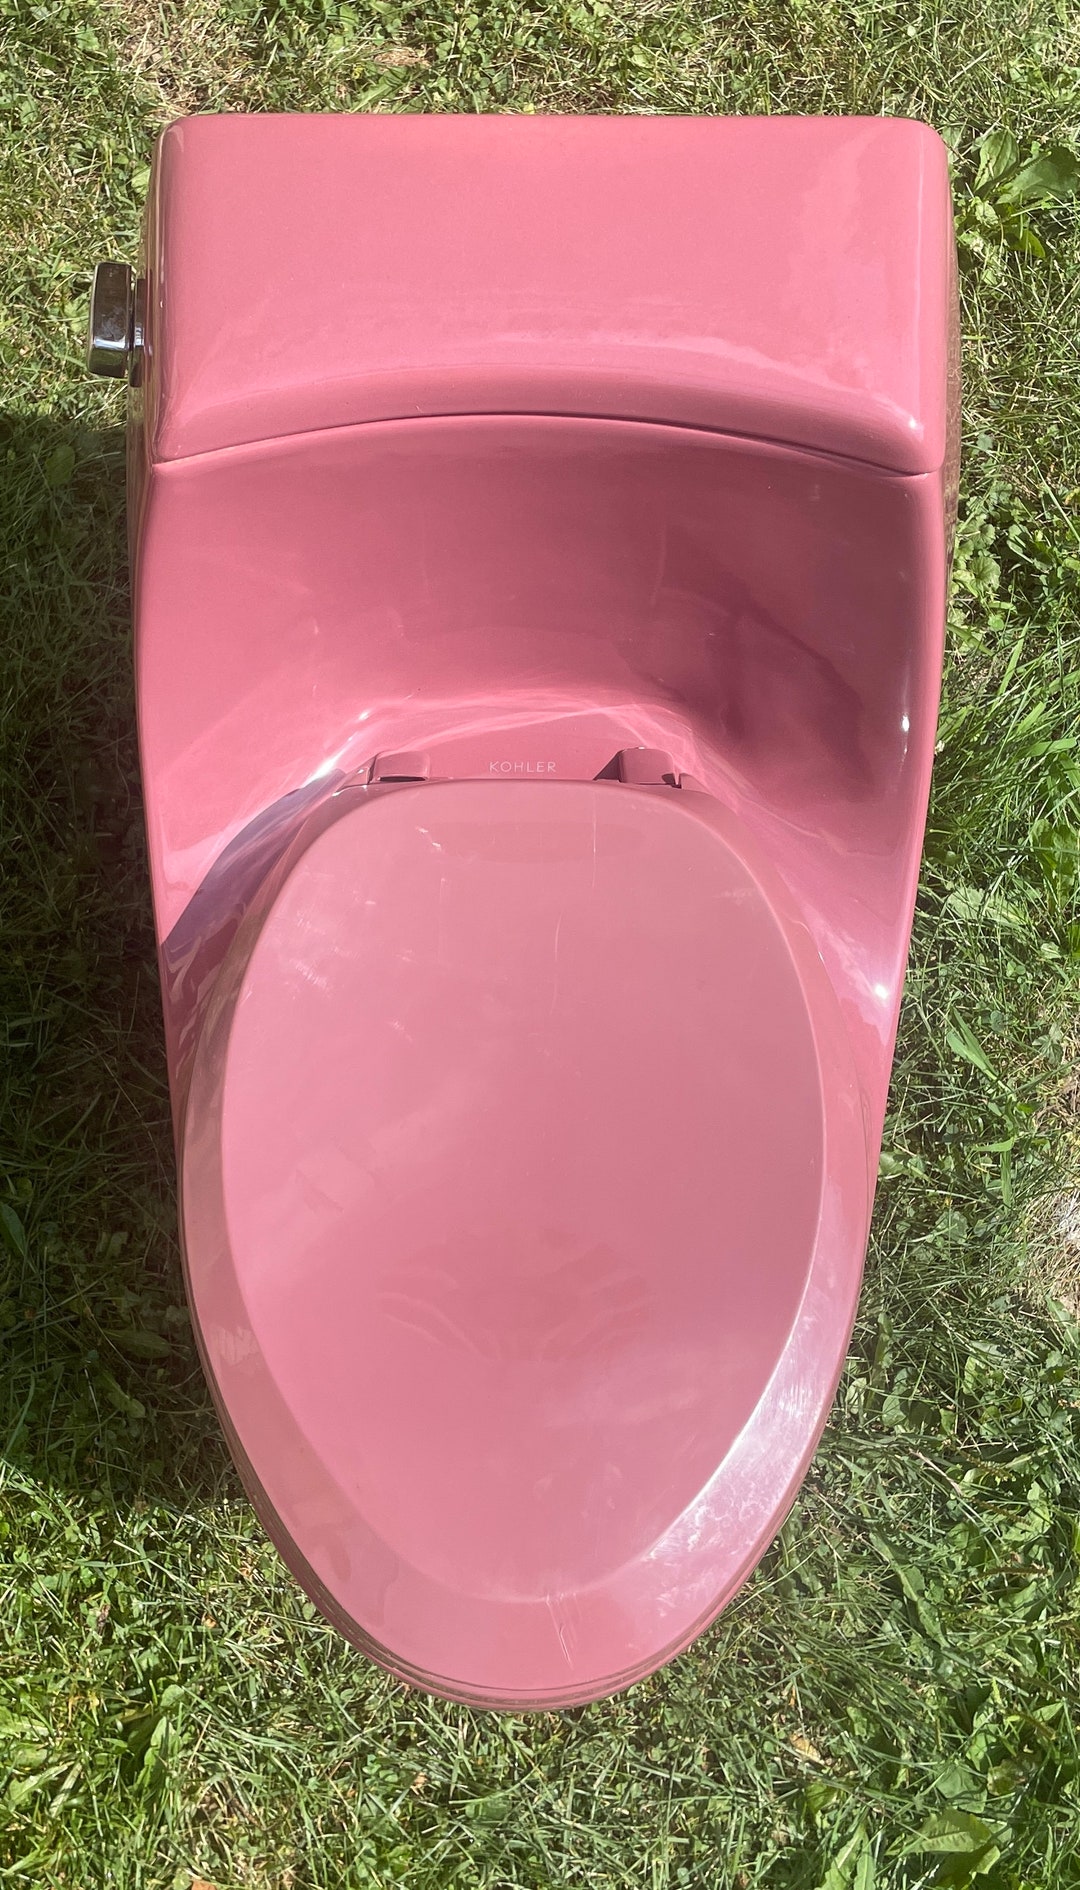 The Pink Stuff Malaysia op Instagram: Dirty Bathroom Sink